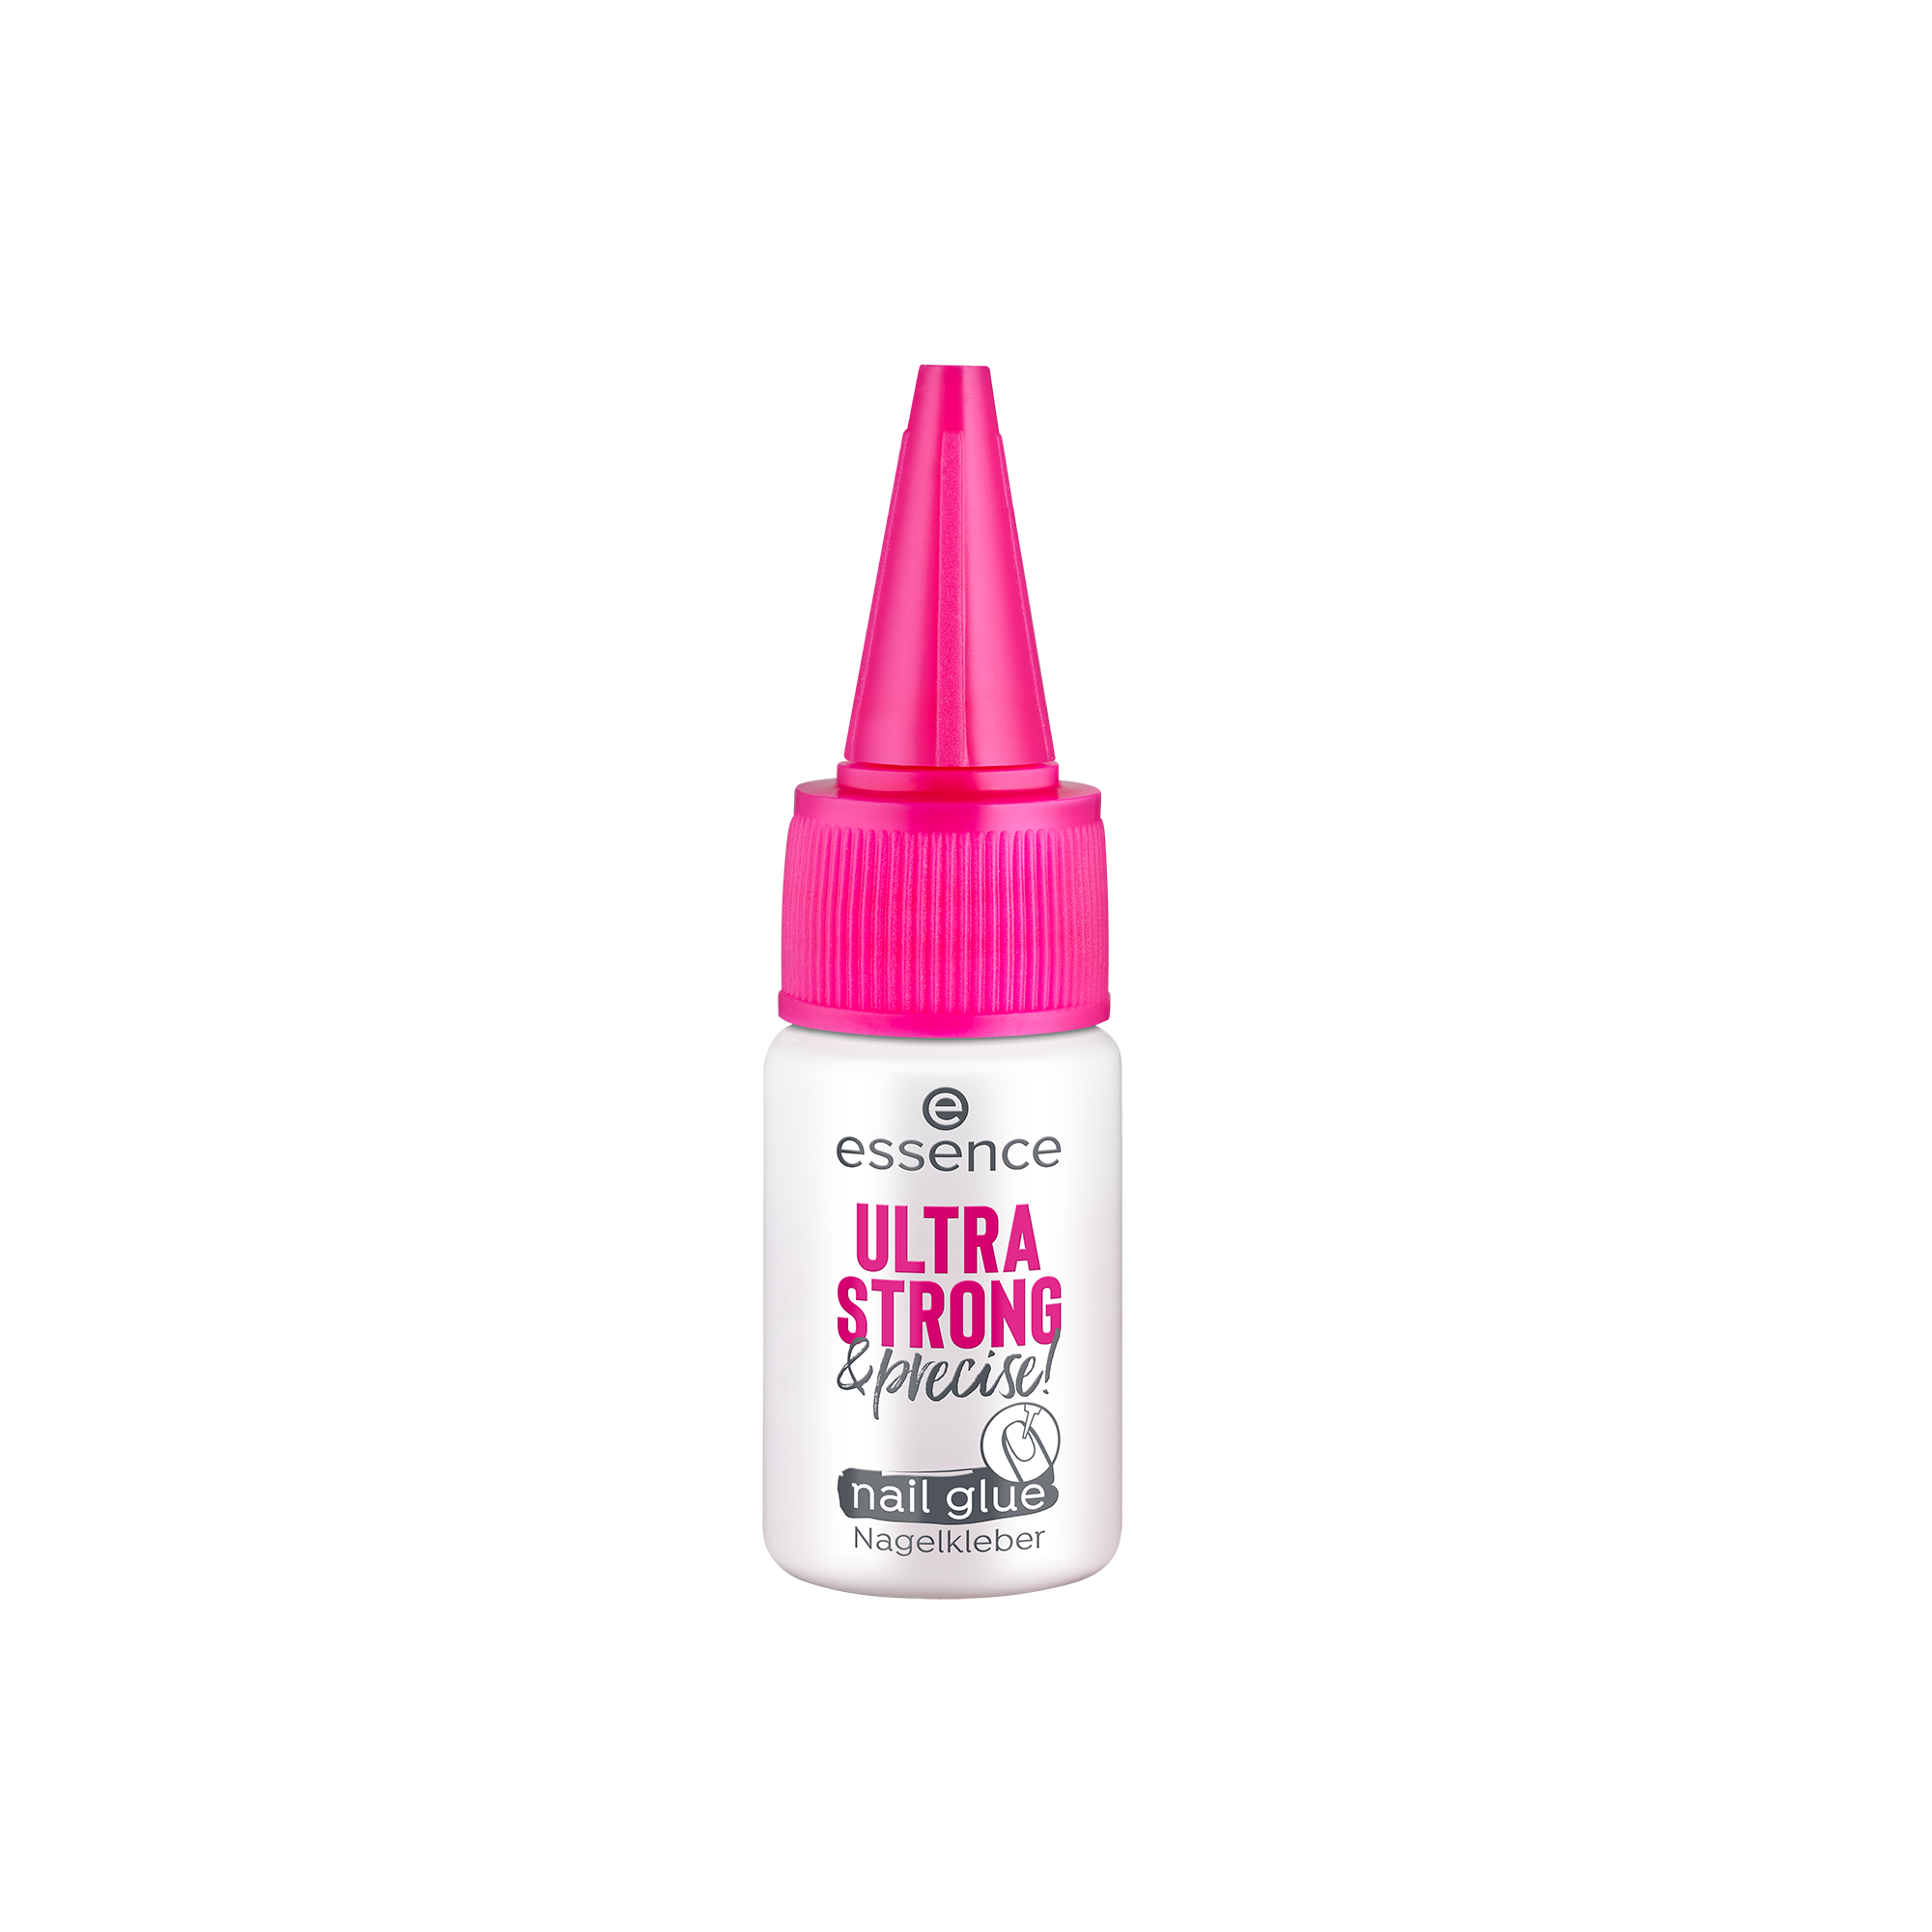 ULTRA STRONG & precise! nail glue